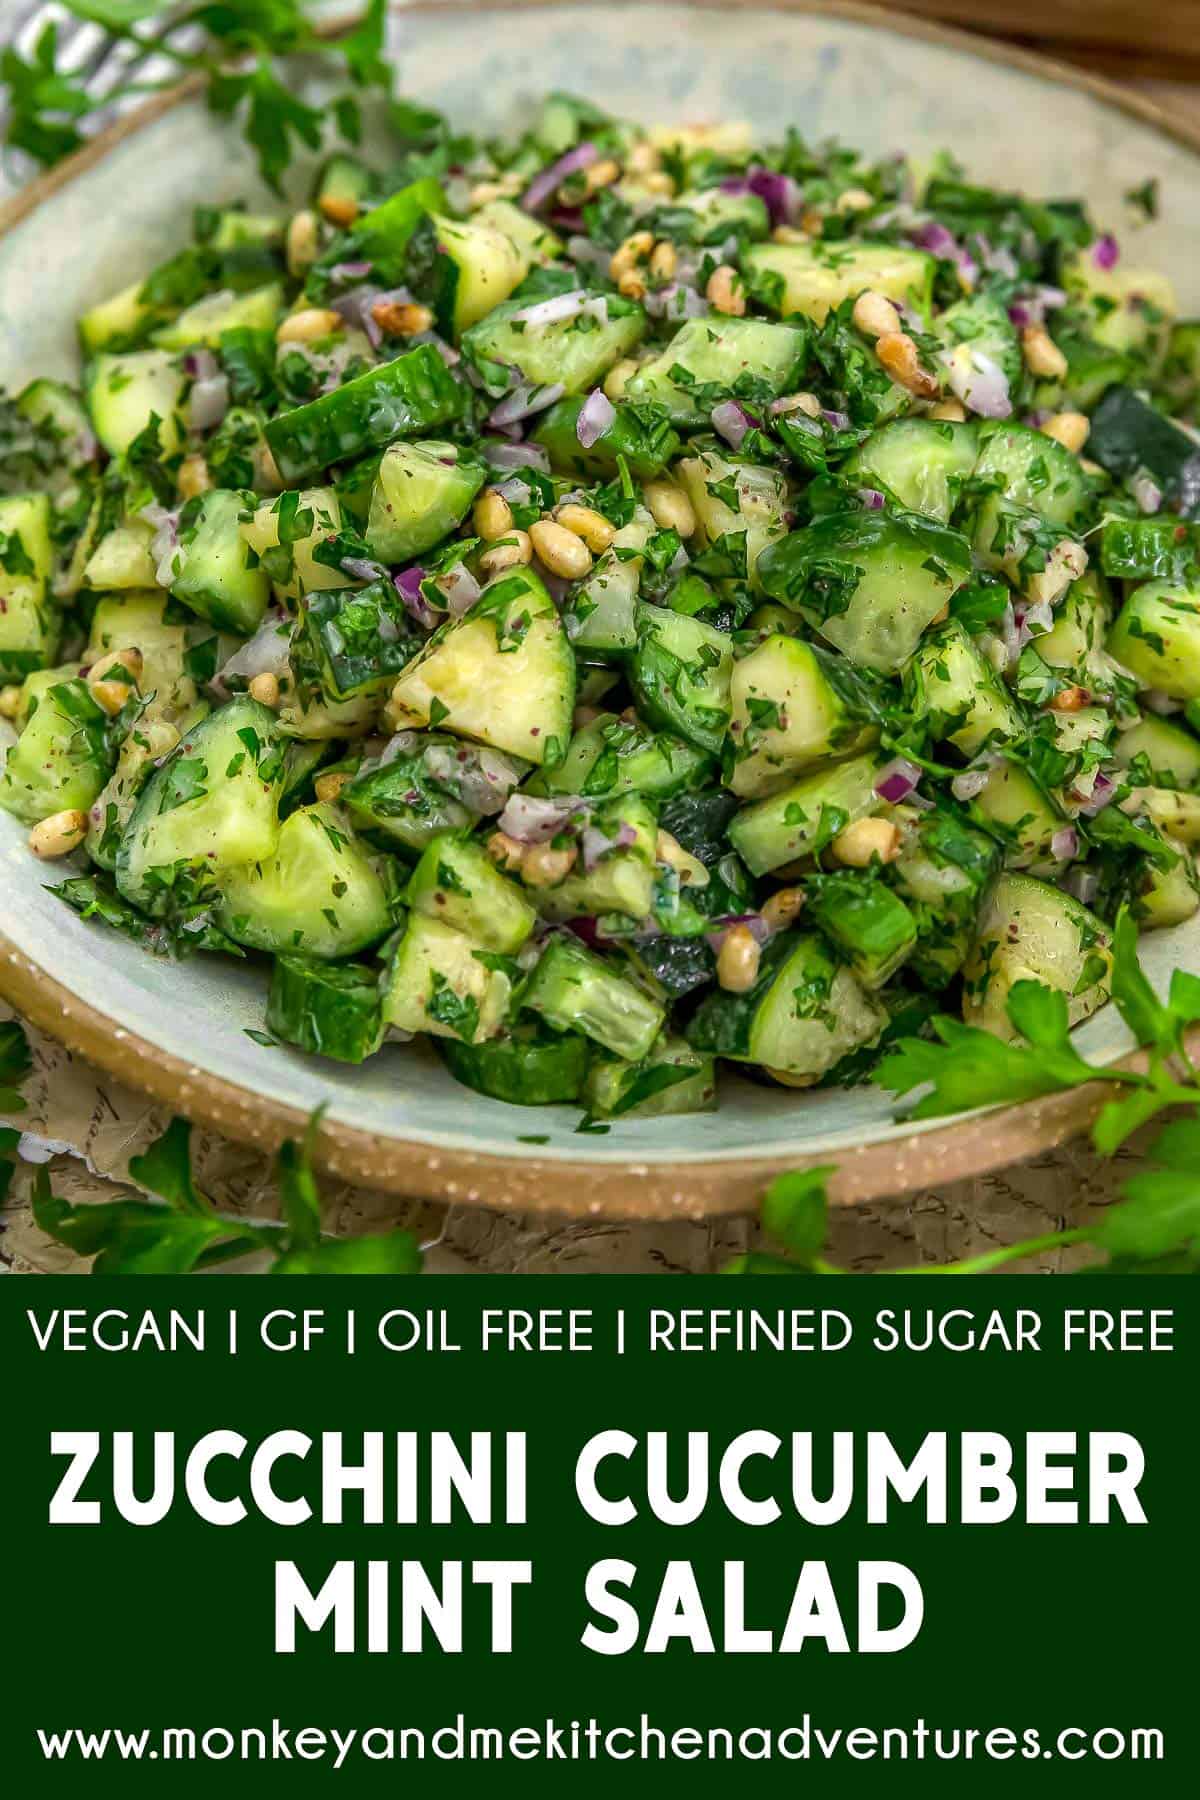 Zucchini Cucumber Mint Salad with text description